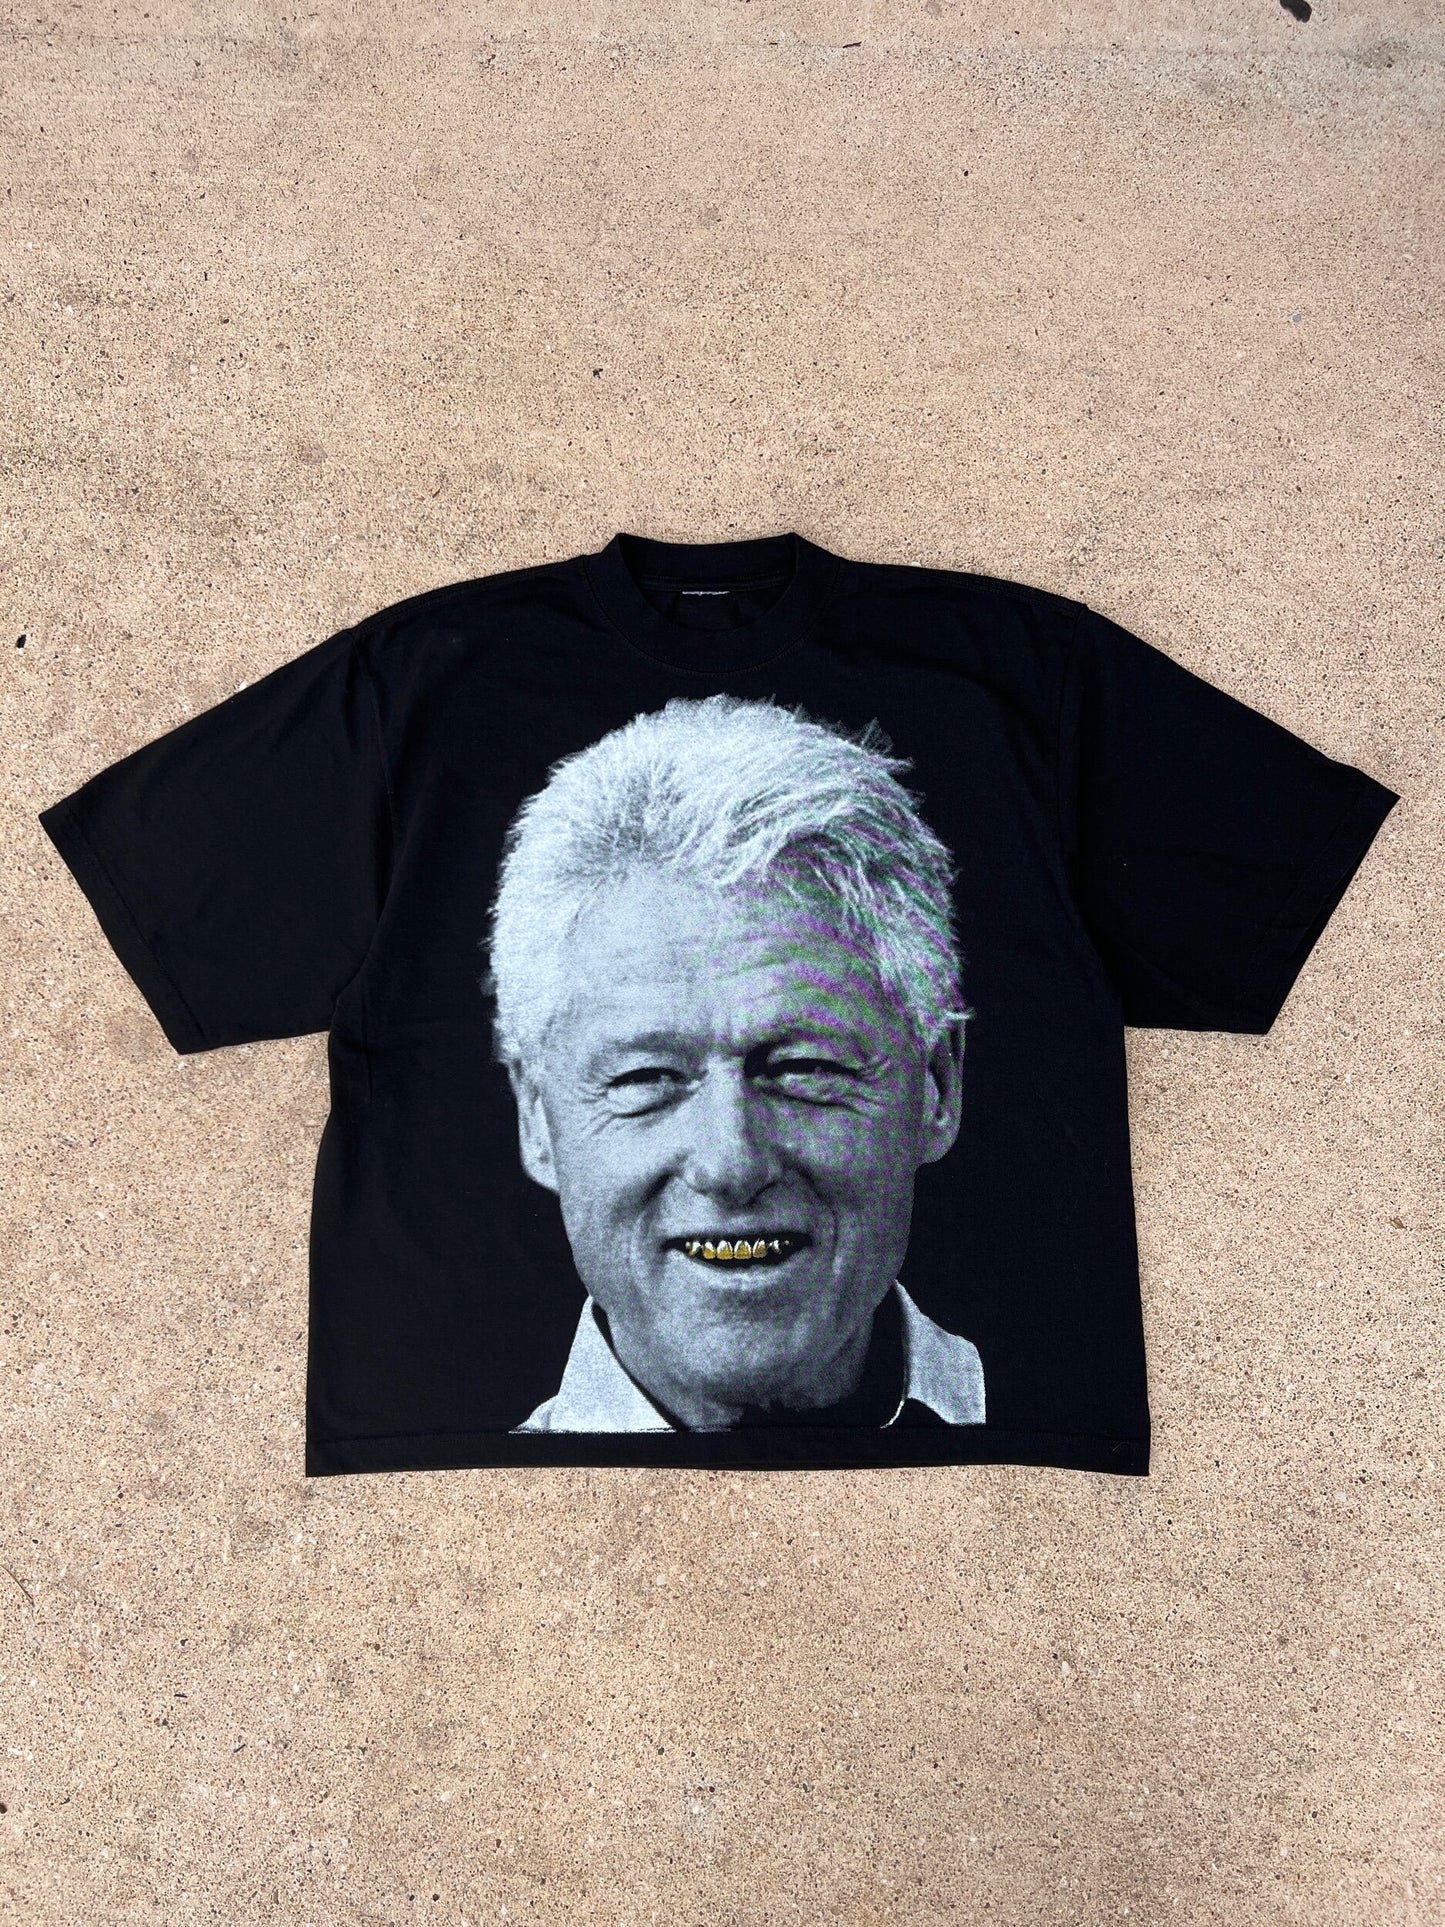 BILL Clinton X BISON Mr President Tee